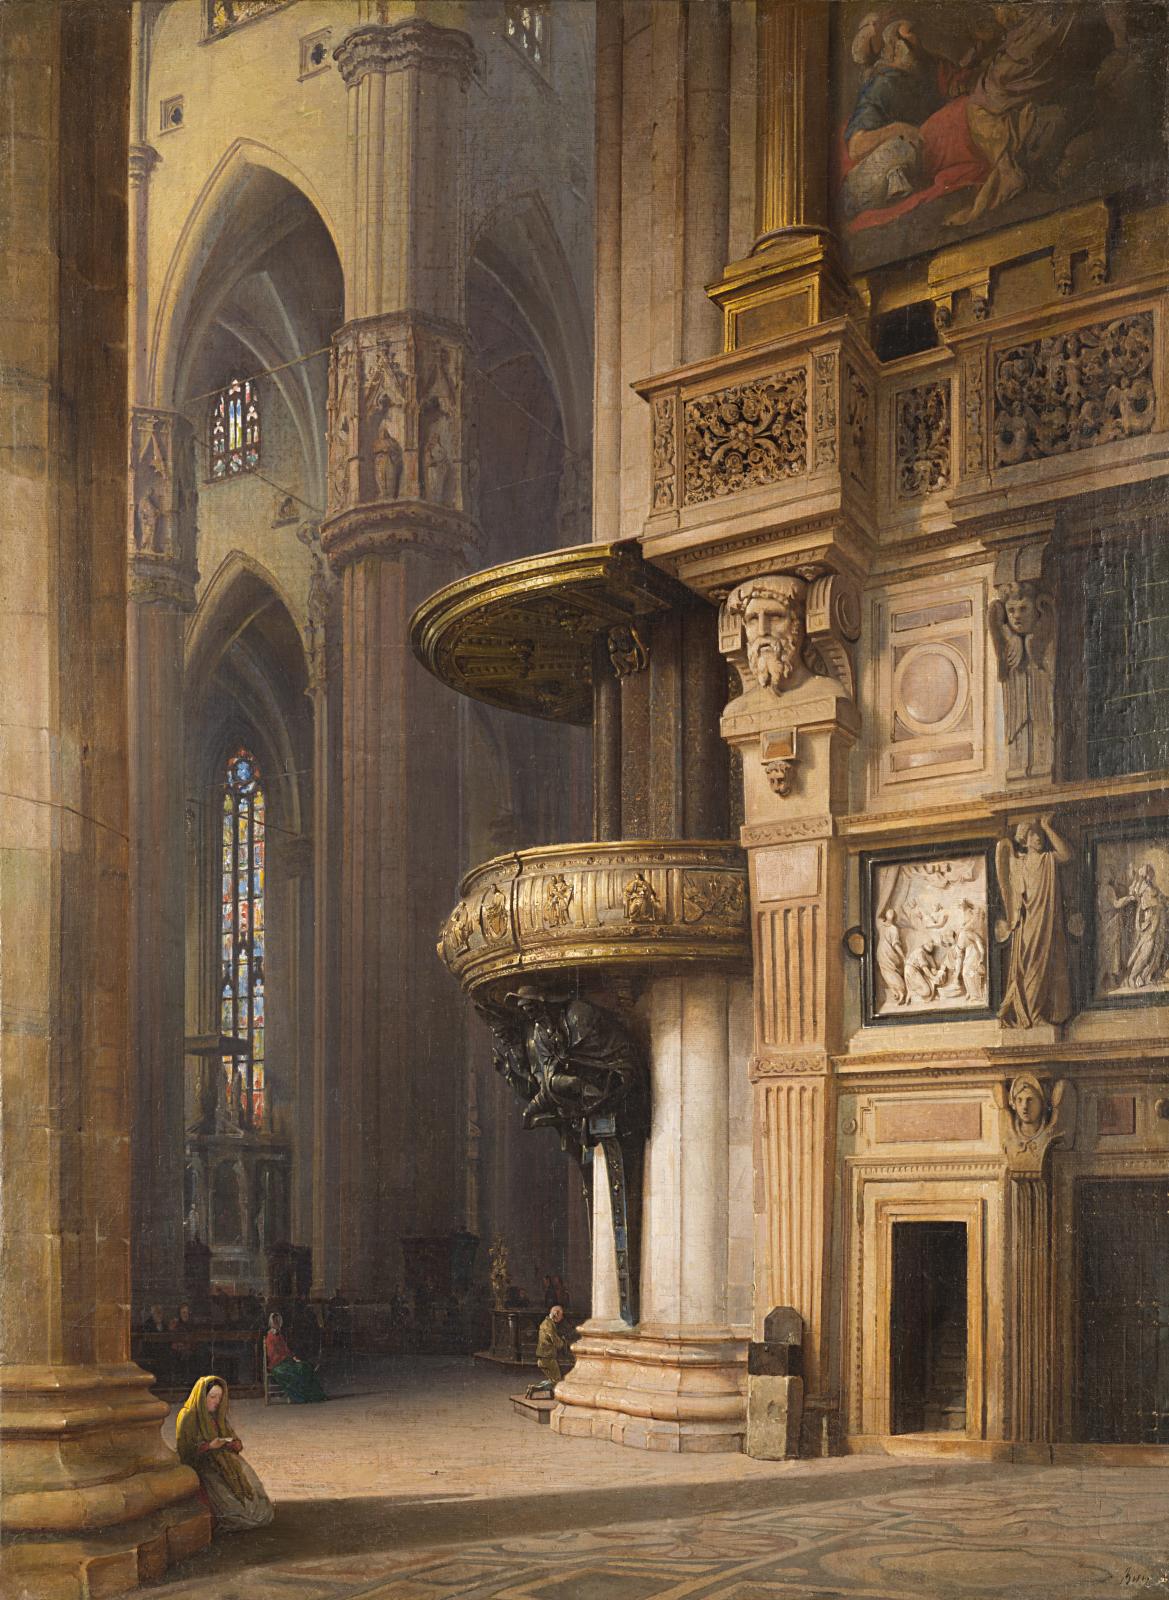 Luigi Bisi, Interno del Duomo di Milano (1859; olio su tela, 109,9 x 83,2 cm; Milano, Galleria d’Arte Moderna)
